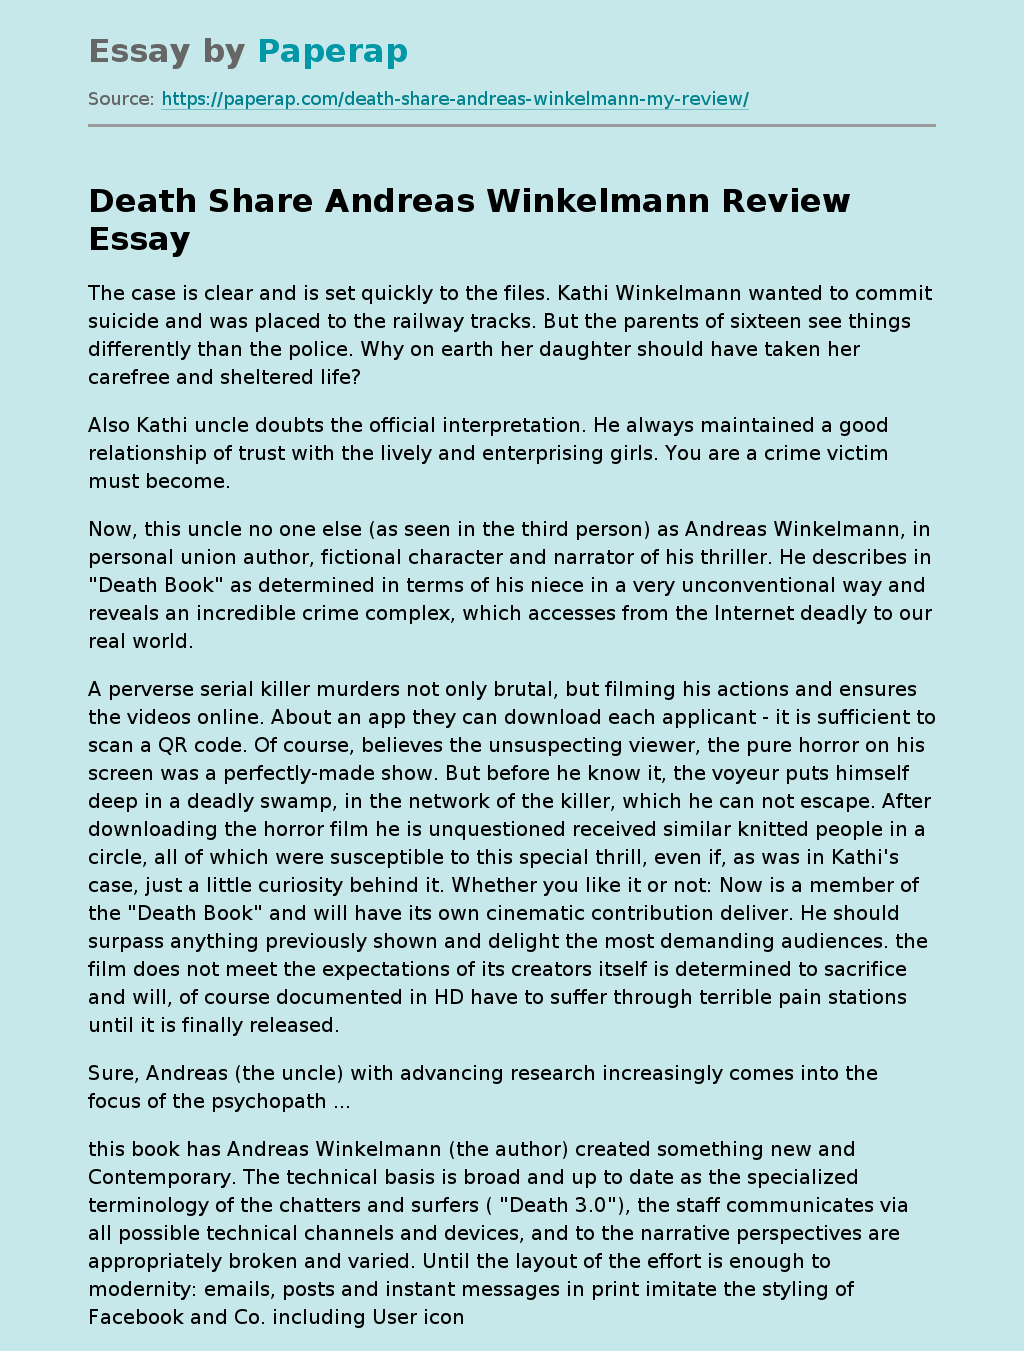 "Death Book" by Andreas Winkelmann